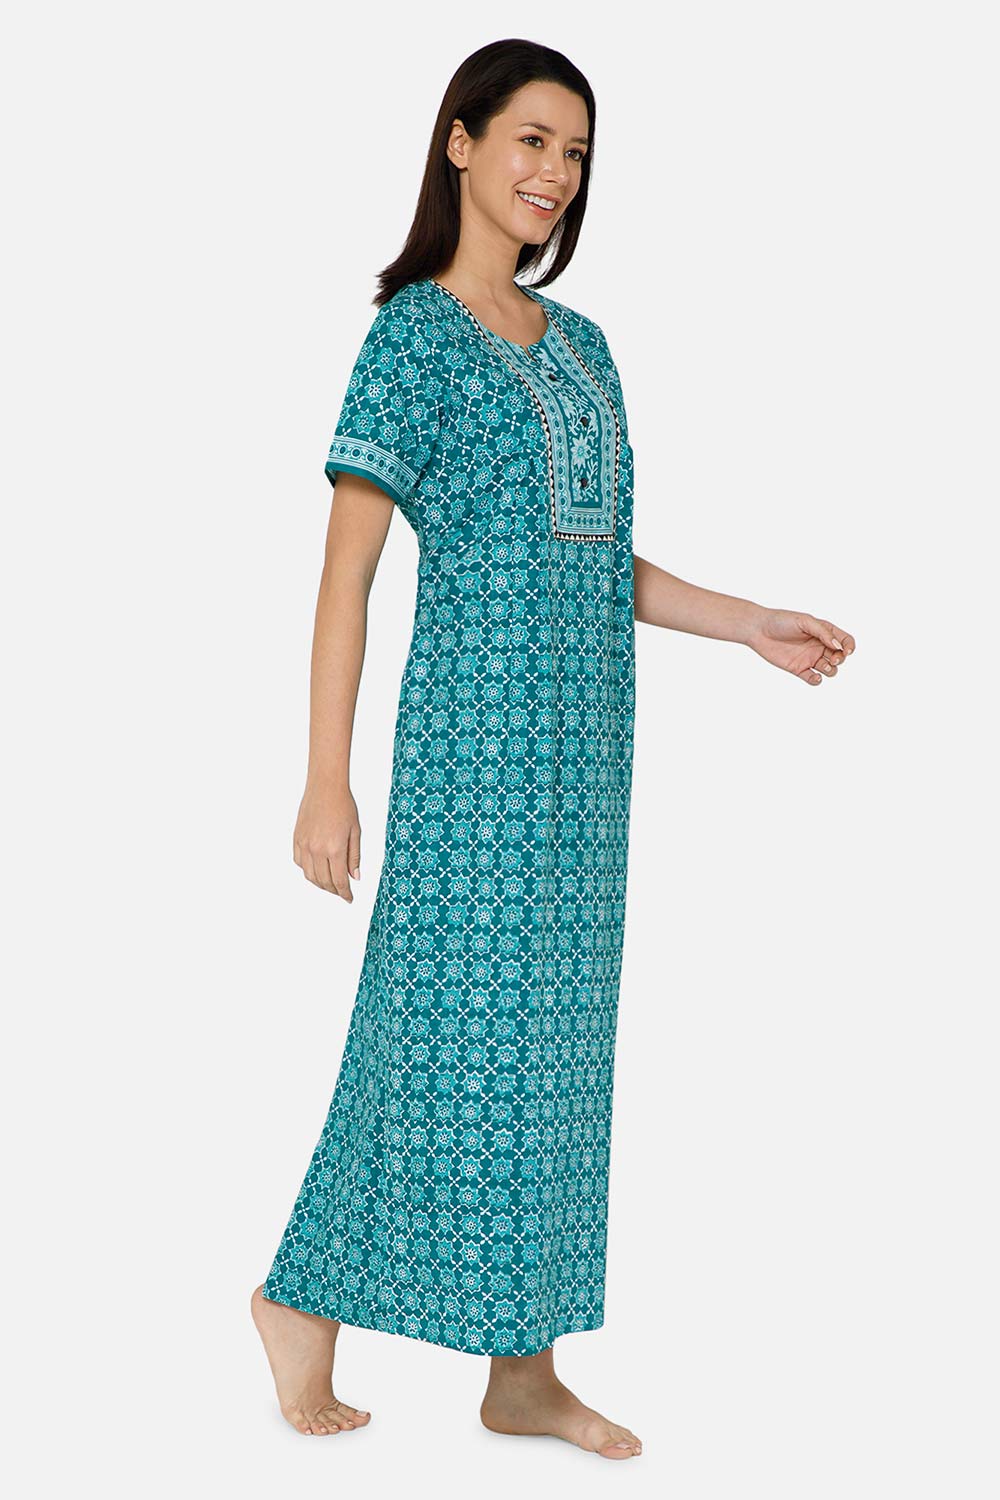 Naidu Hall A-line Women's Nighty Full Length Half Sleeve  - Green - R136